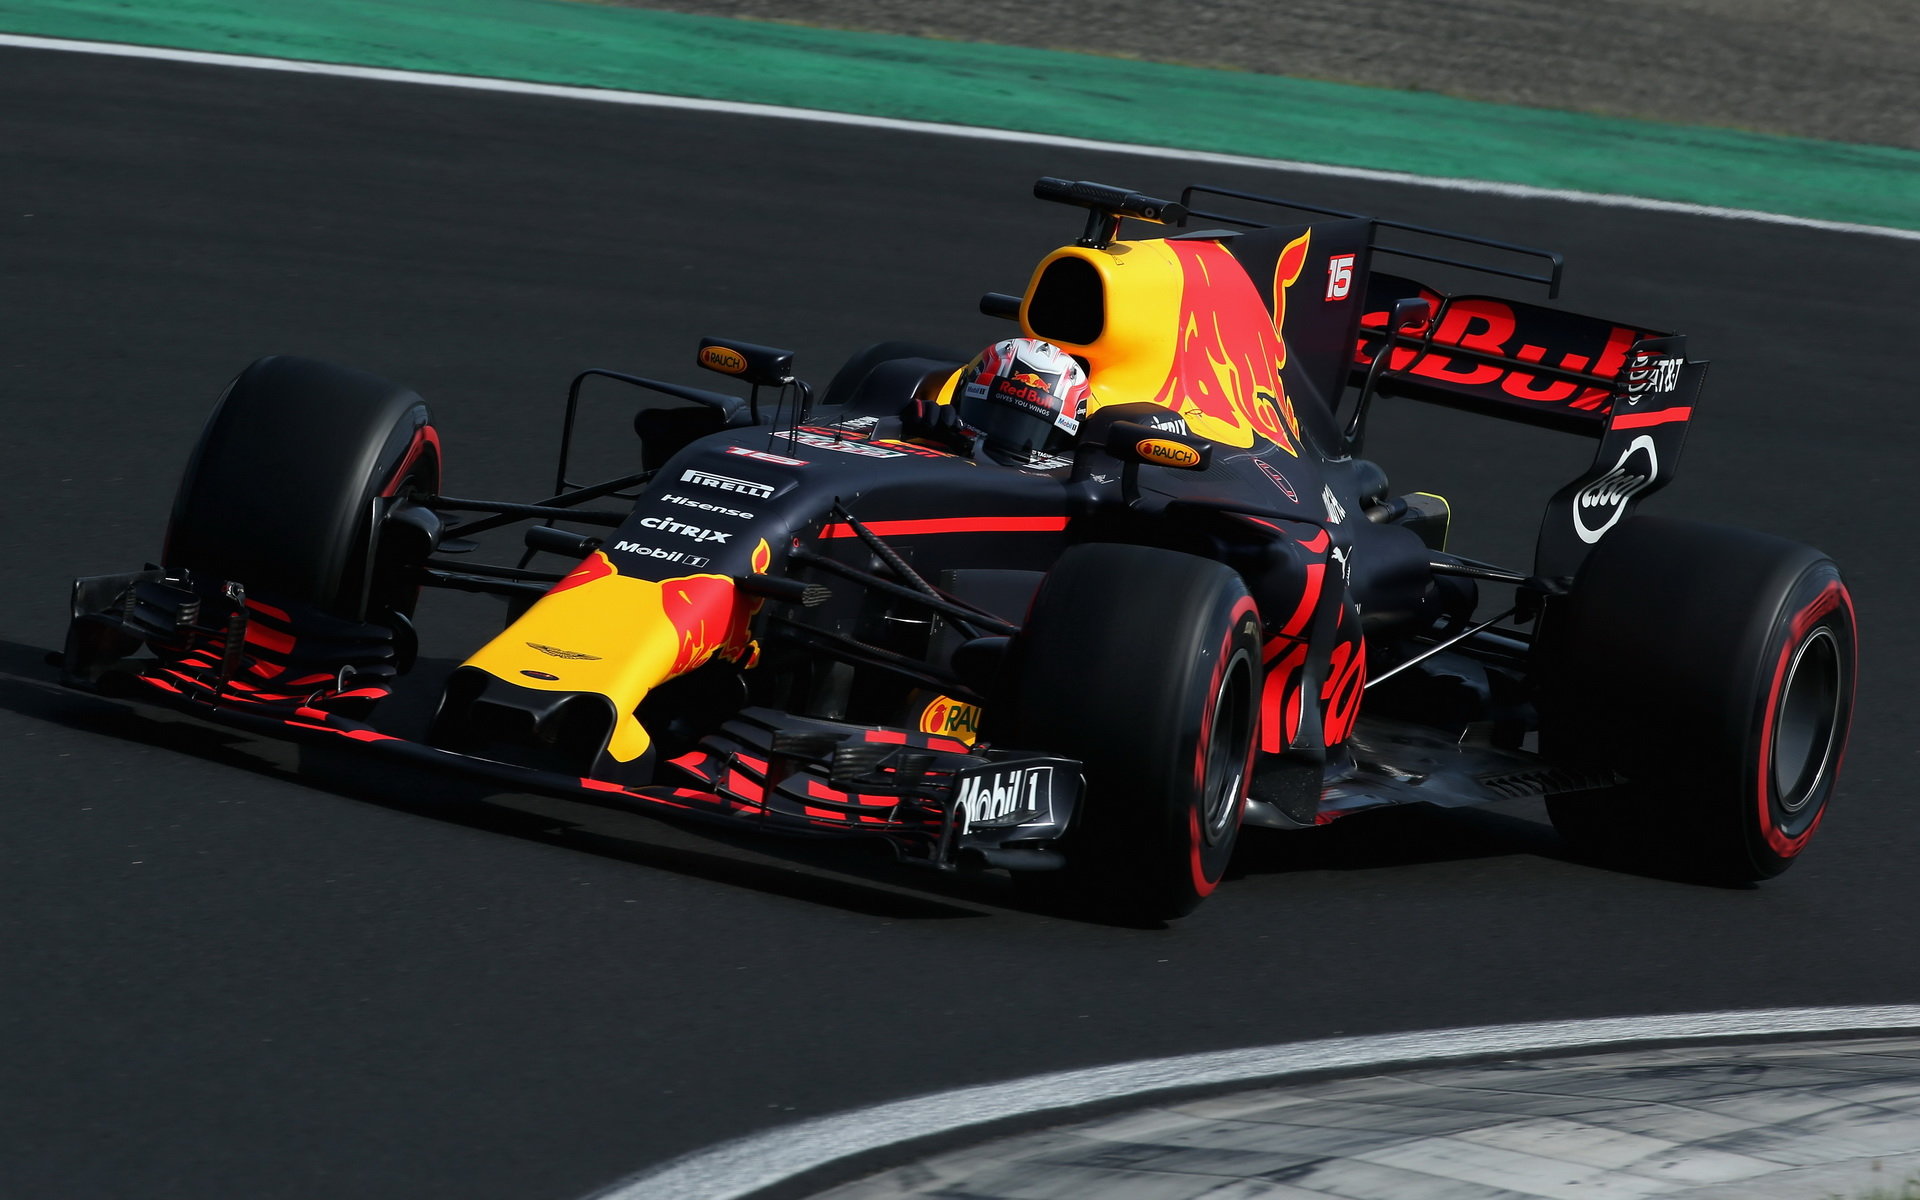 Pierre Gasly testuje druhý den vůz Red Bull RB13 - Renault v Maďarsku